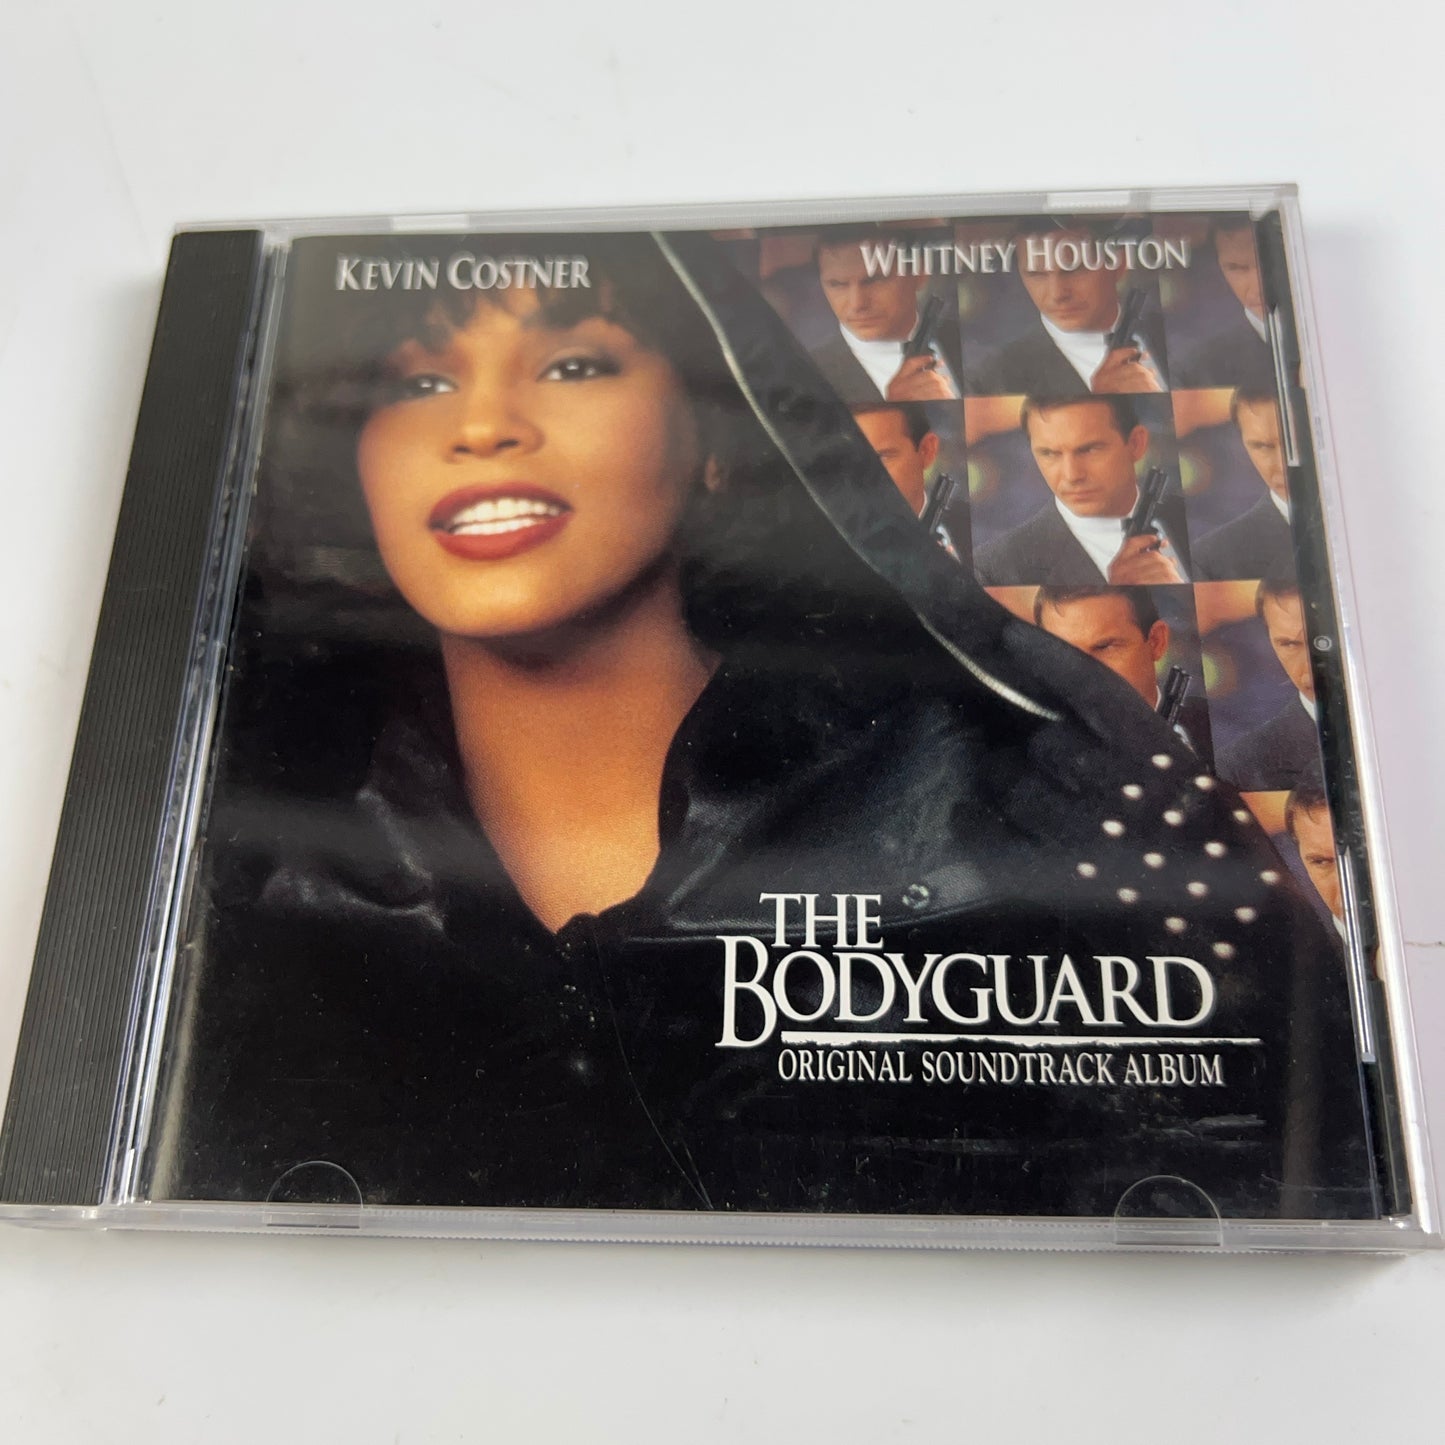 The Bodyguard: Original Soundtrack Album - Audio CD